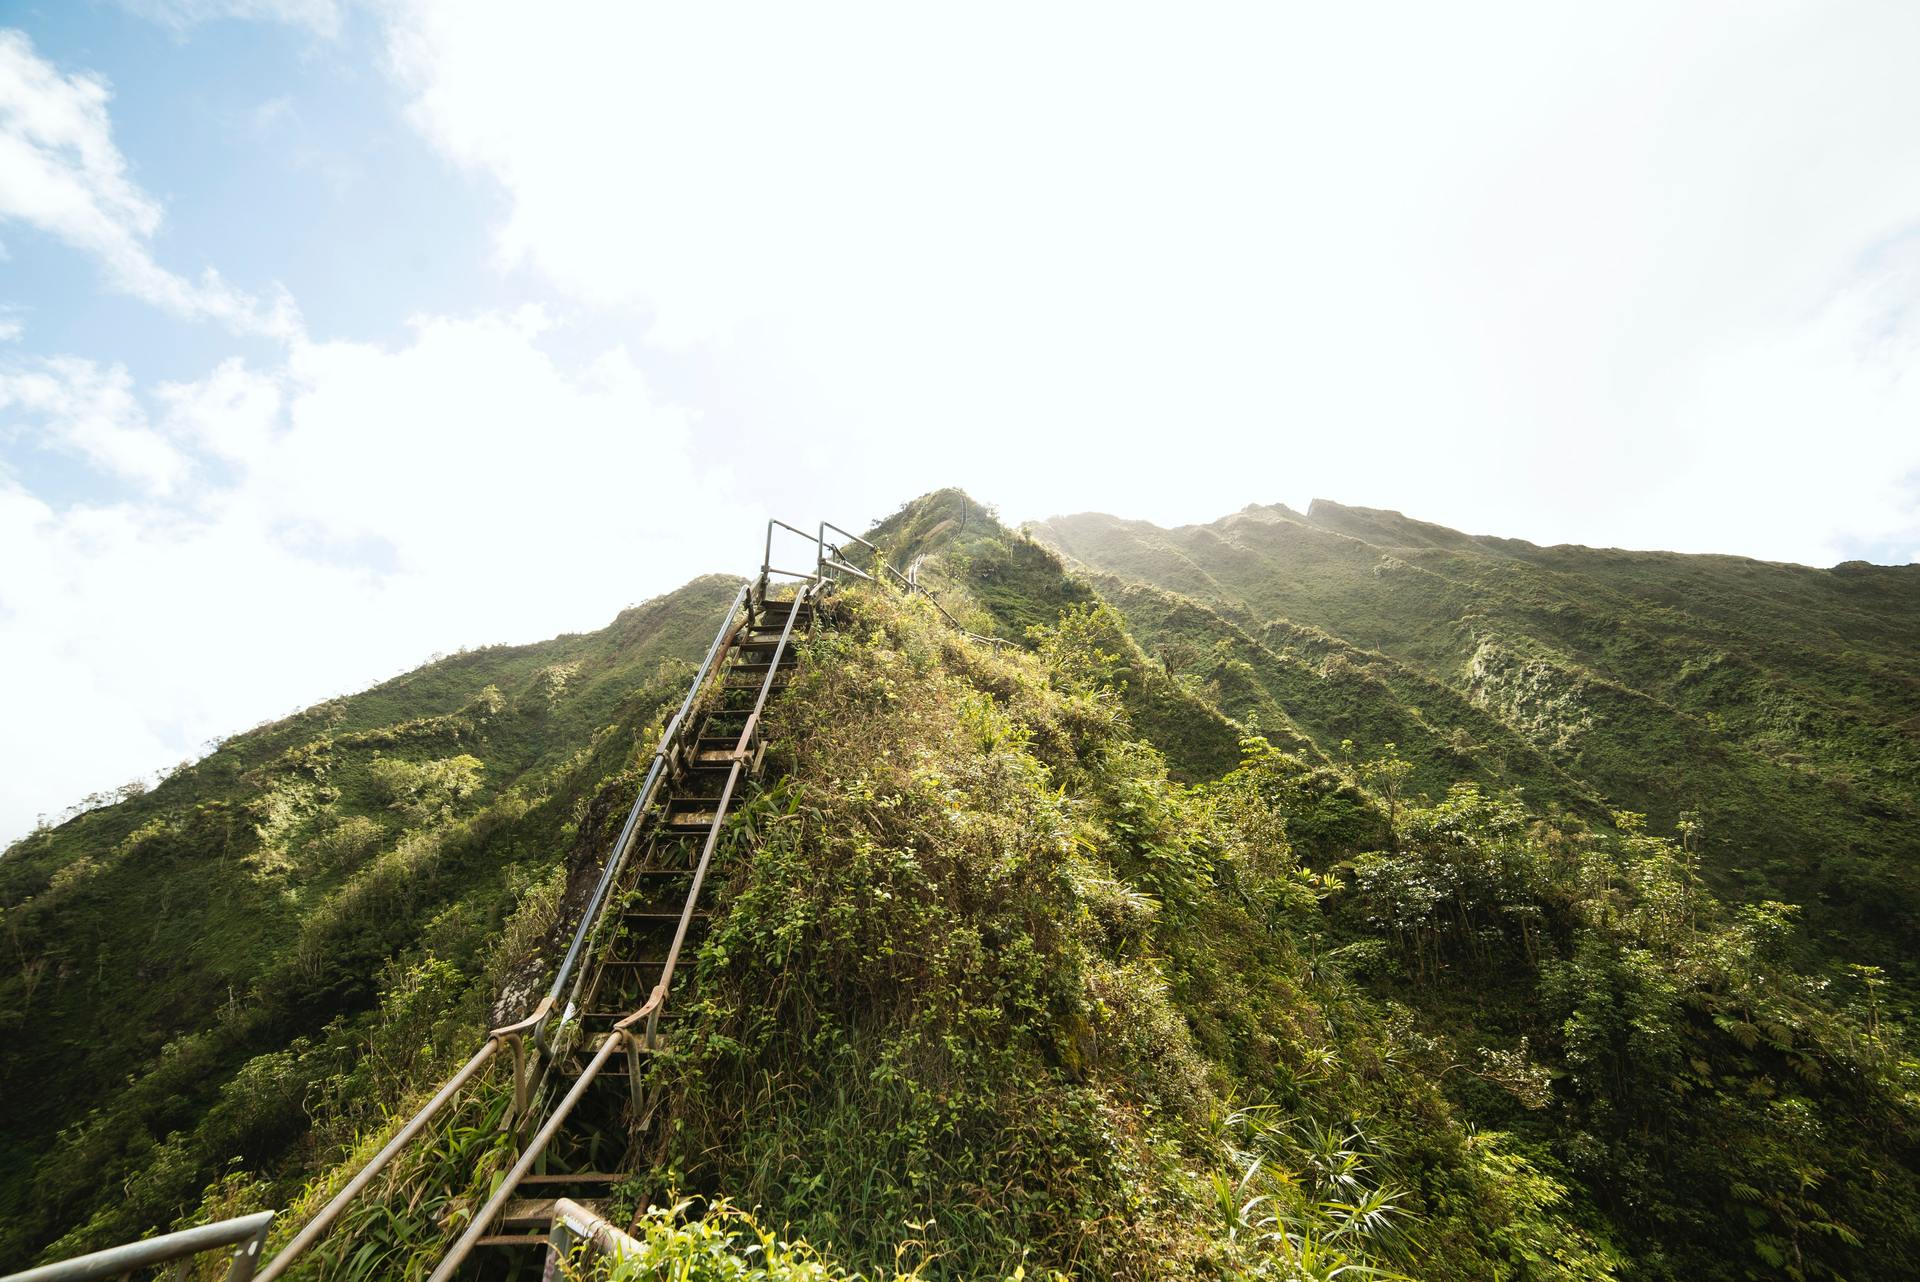 Stairway to Heaven Hike in Hawaii // Haiku Stairs (2023) 